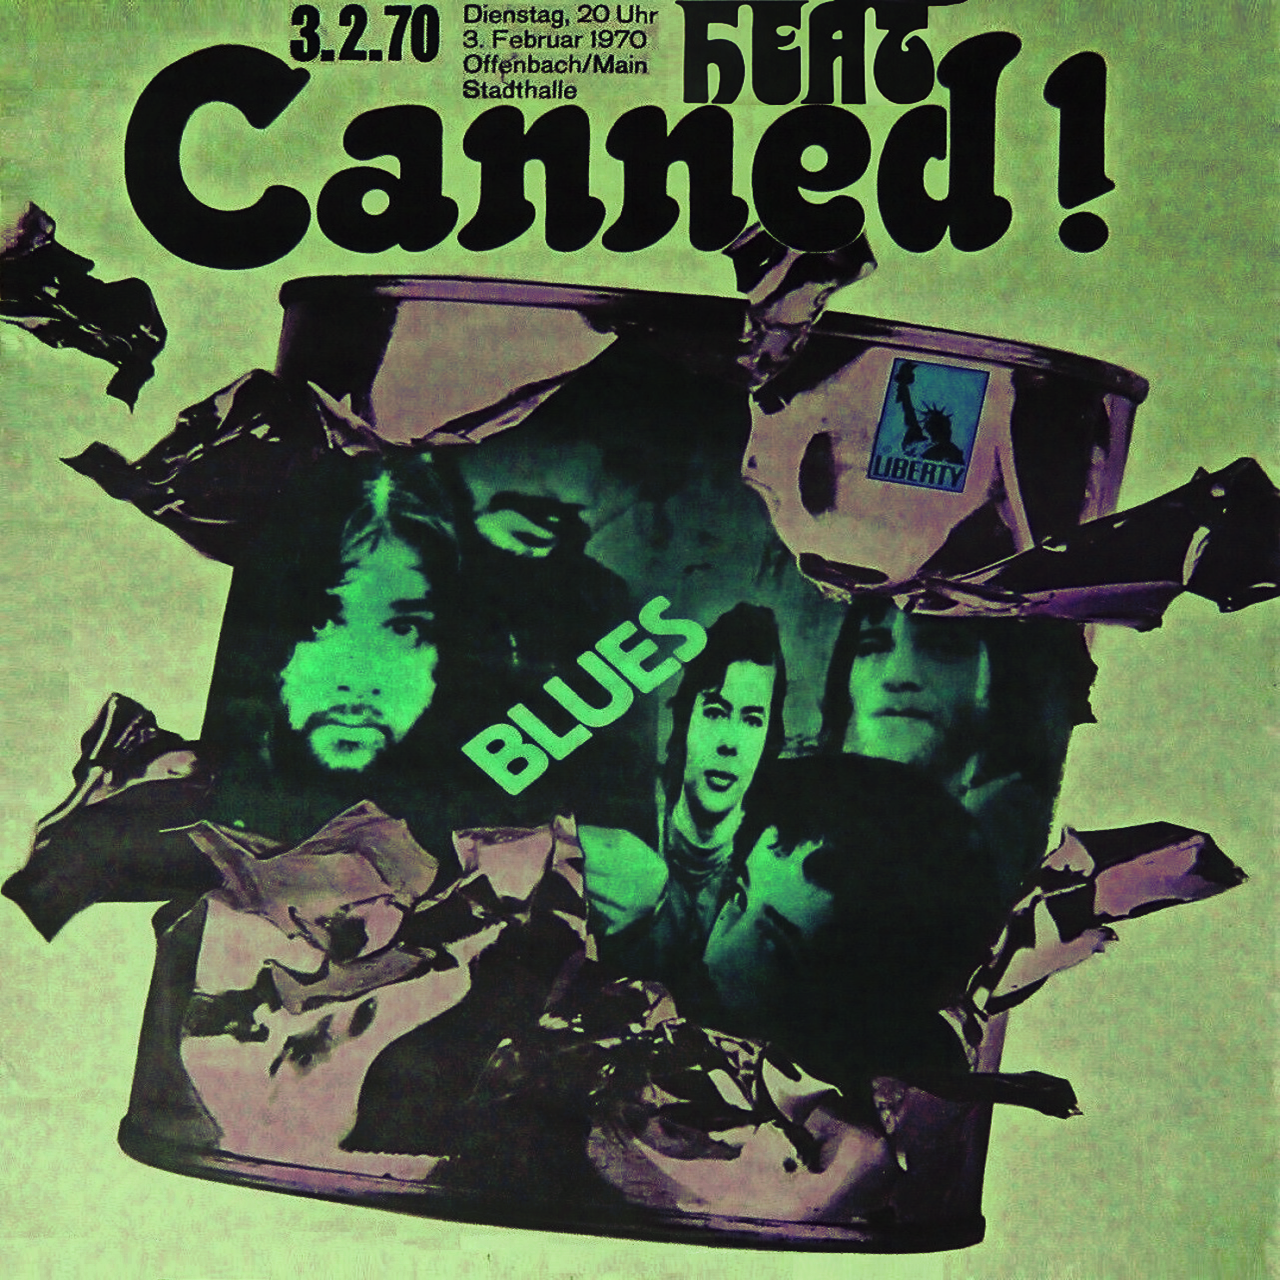 CannedHeat1970-02-03StadthalleOffenbachGermany (2).png